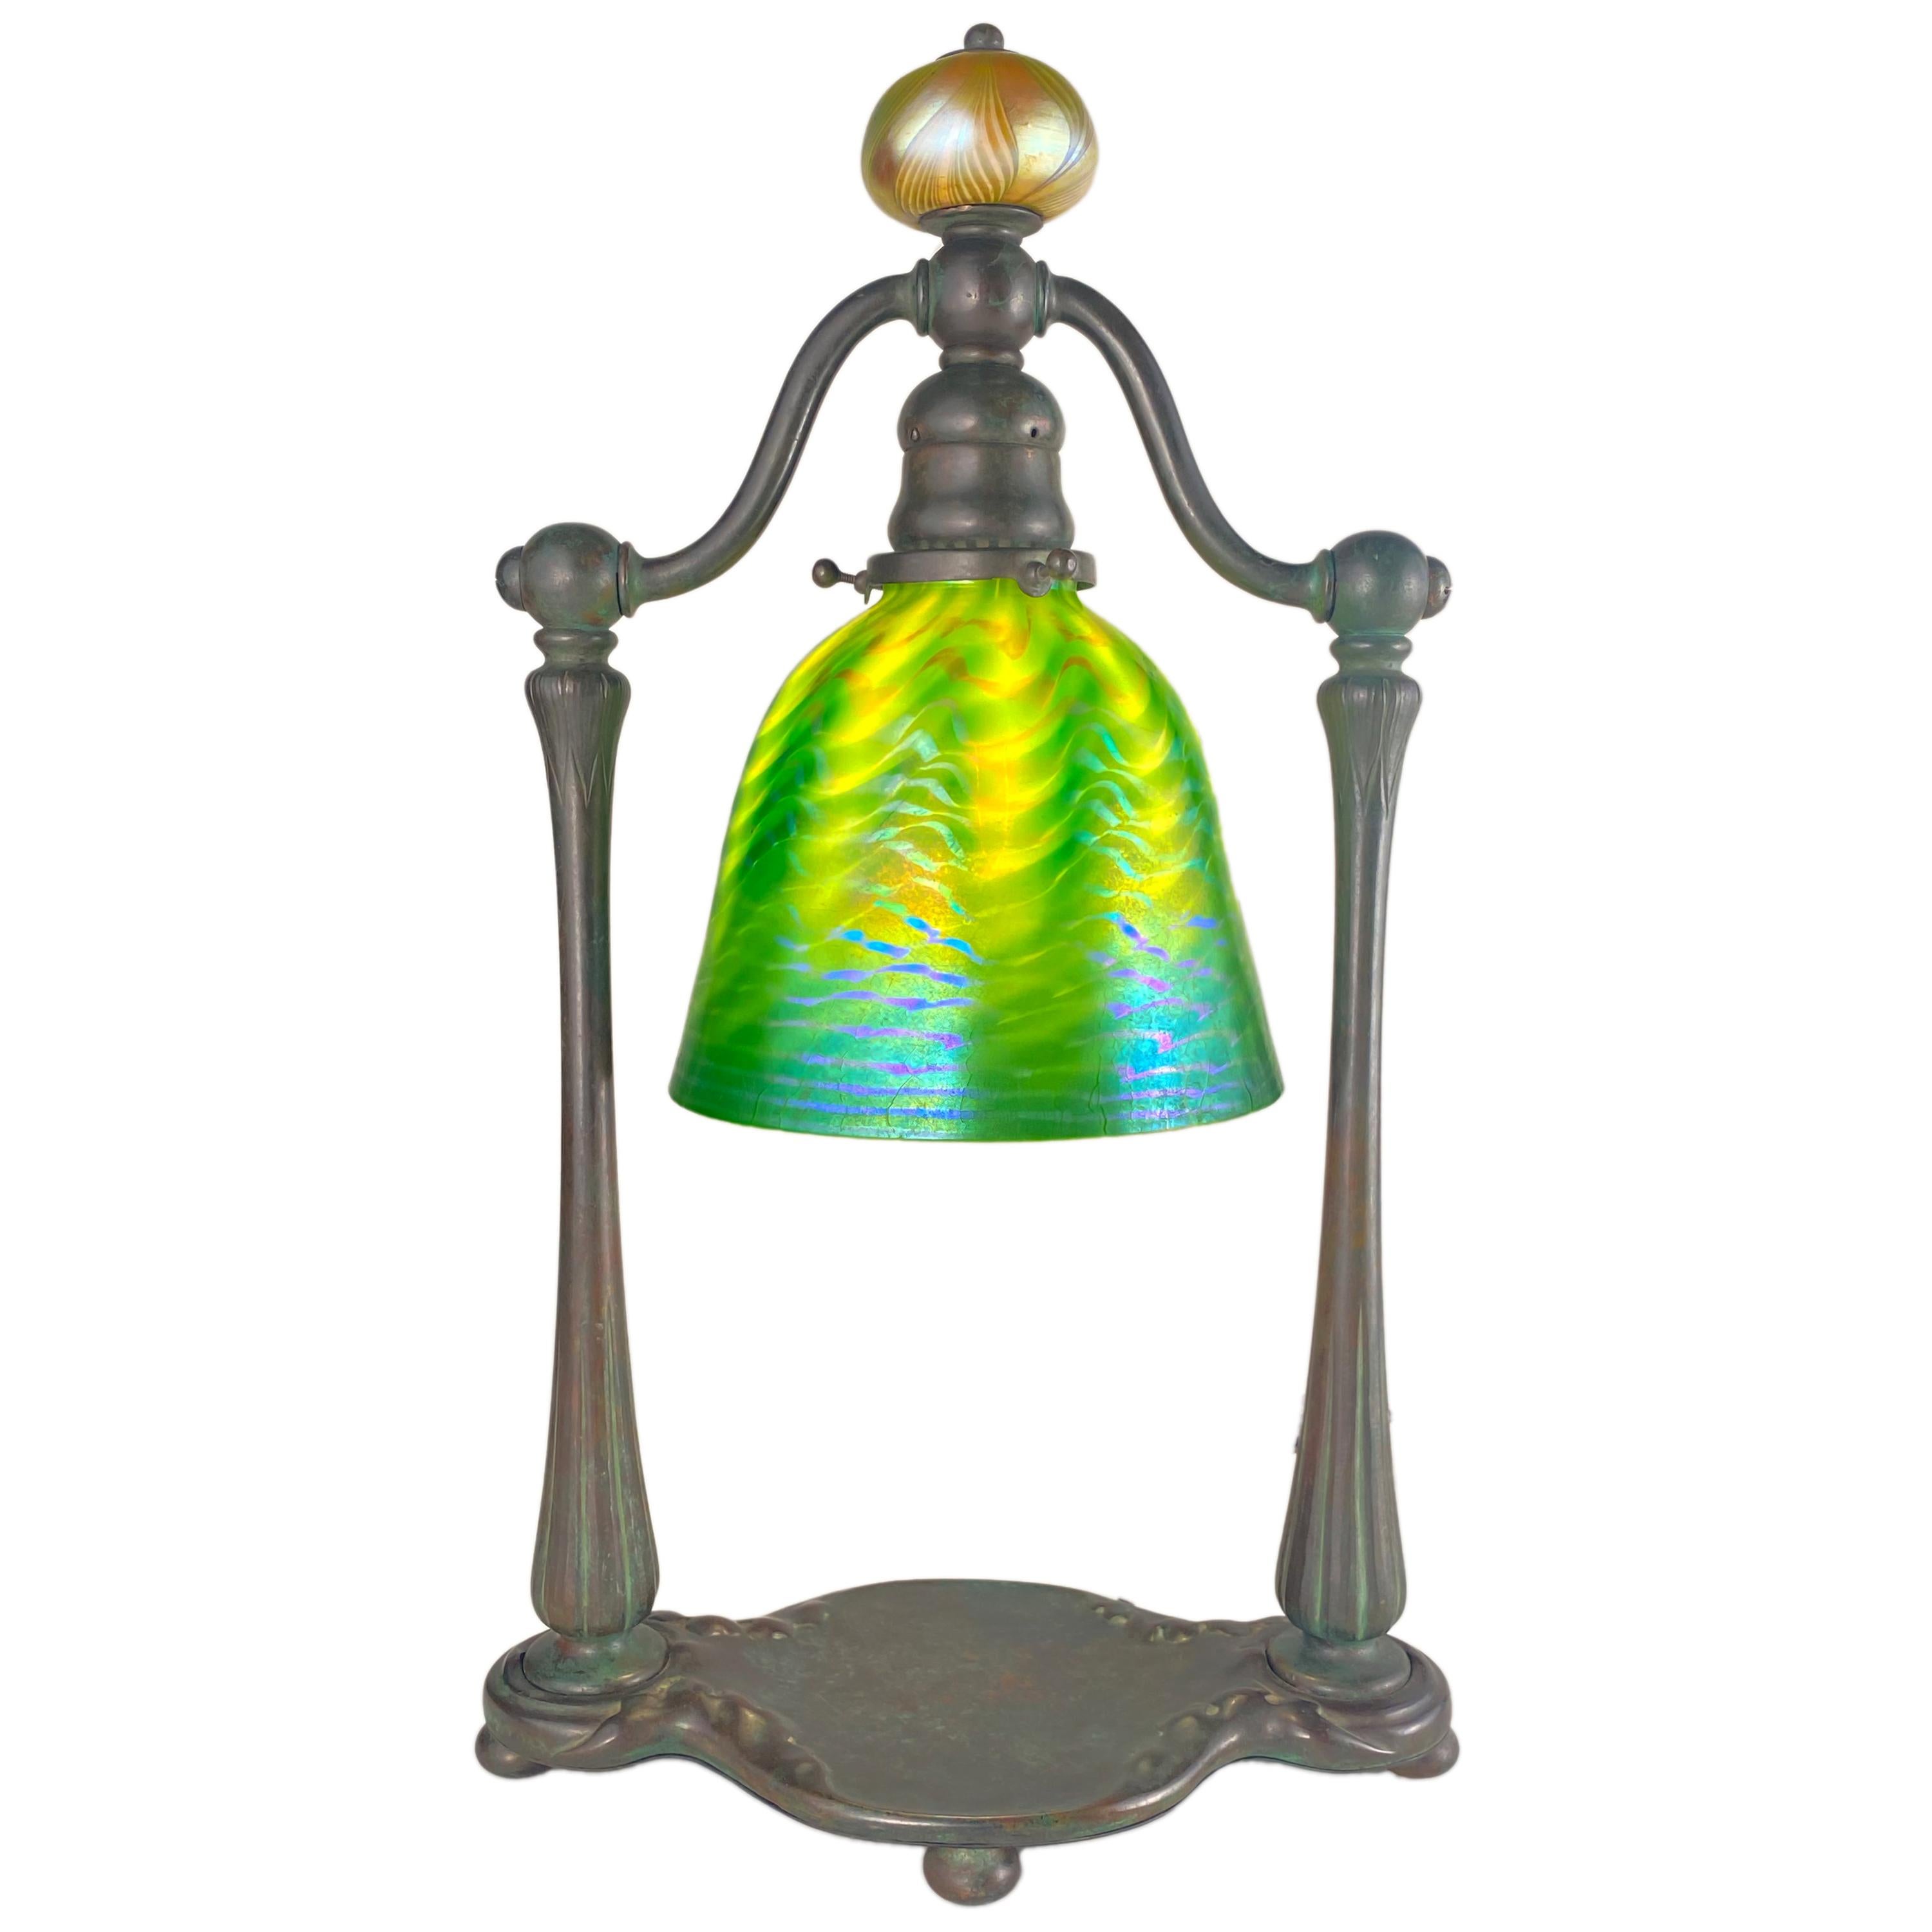 American Art Nouveau Tiffany Favrile "Bell" Desk Lamp by Tiffany Studios